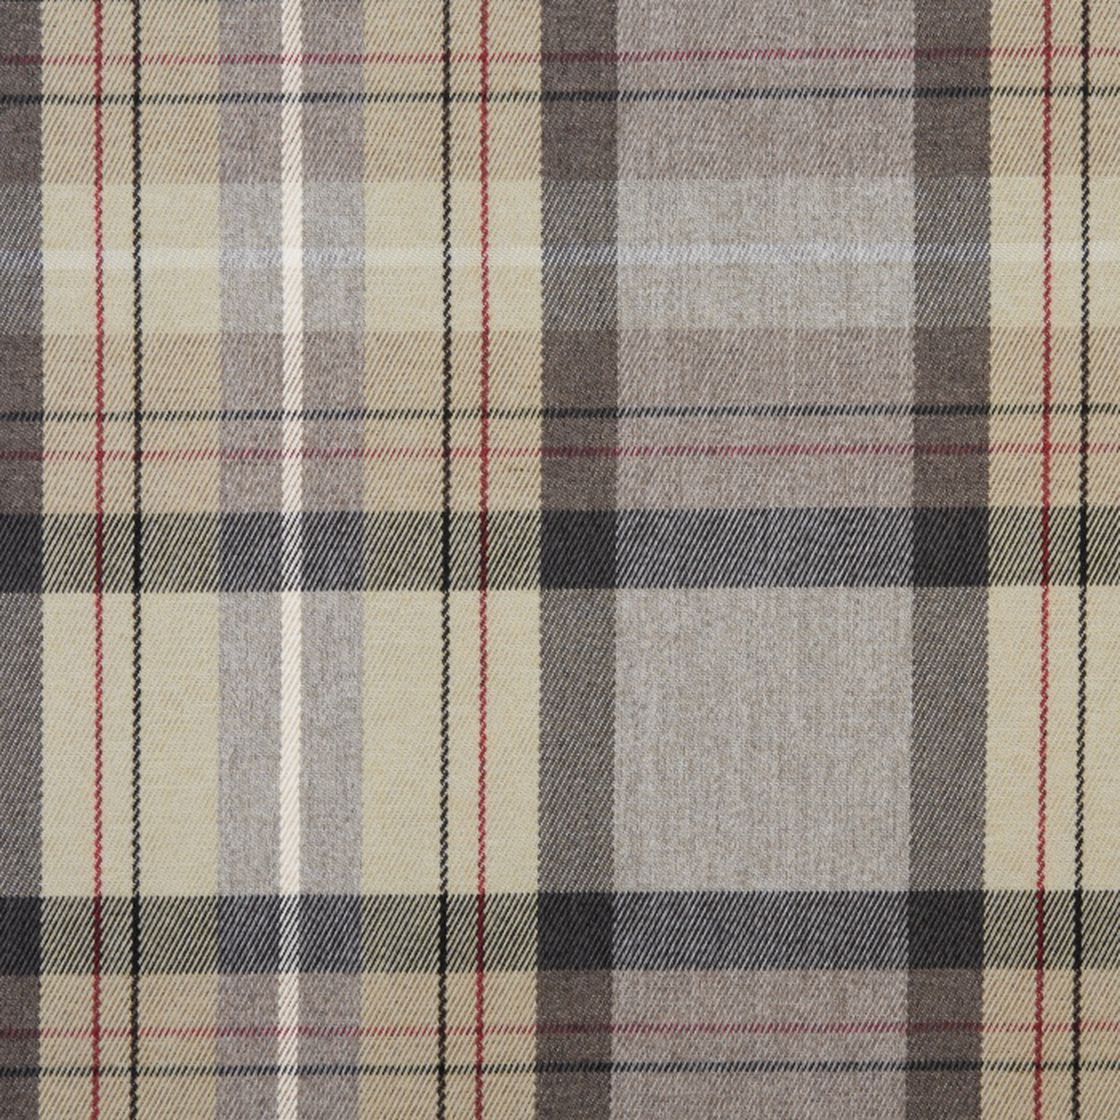 Lanark Tartan Plaid fabric from James Dunlop